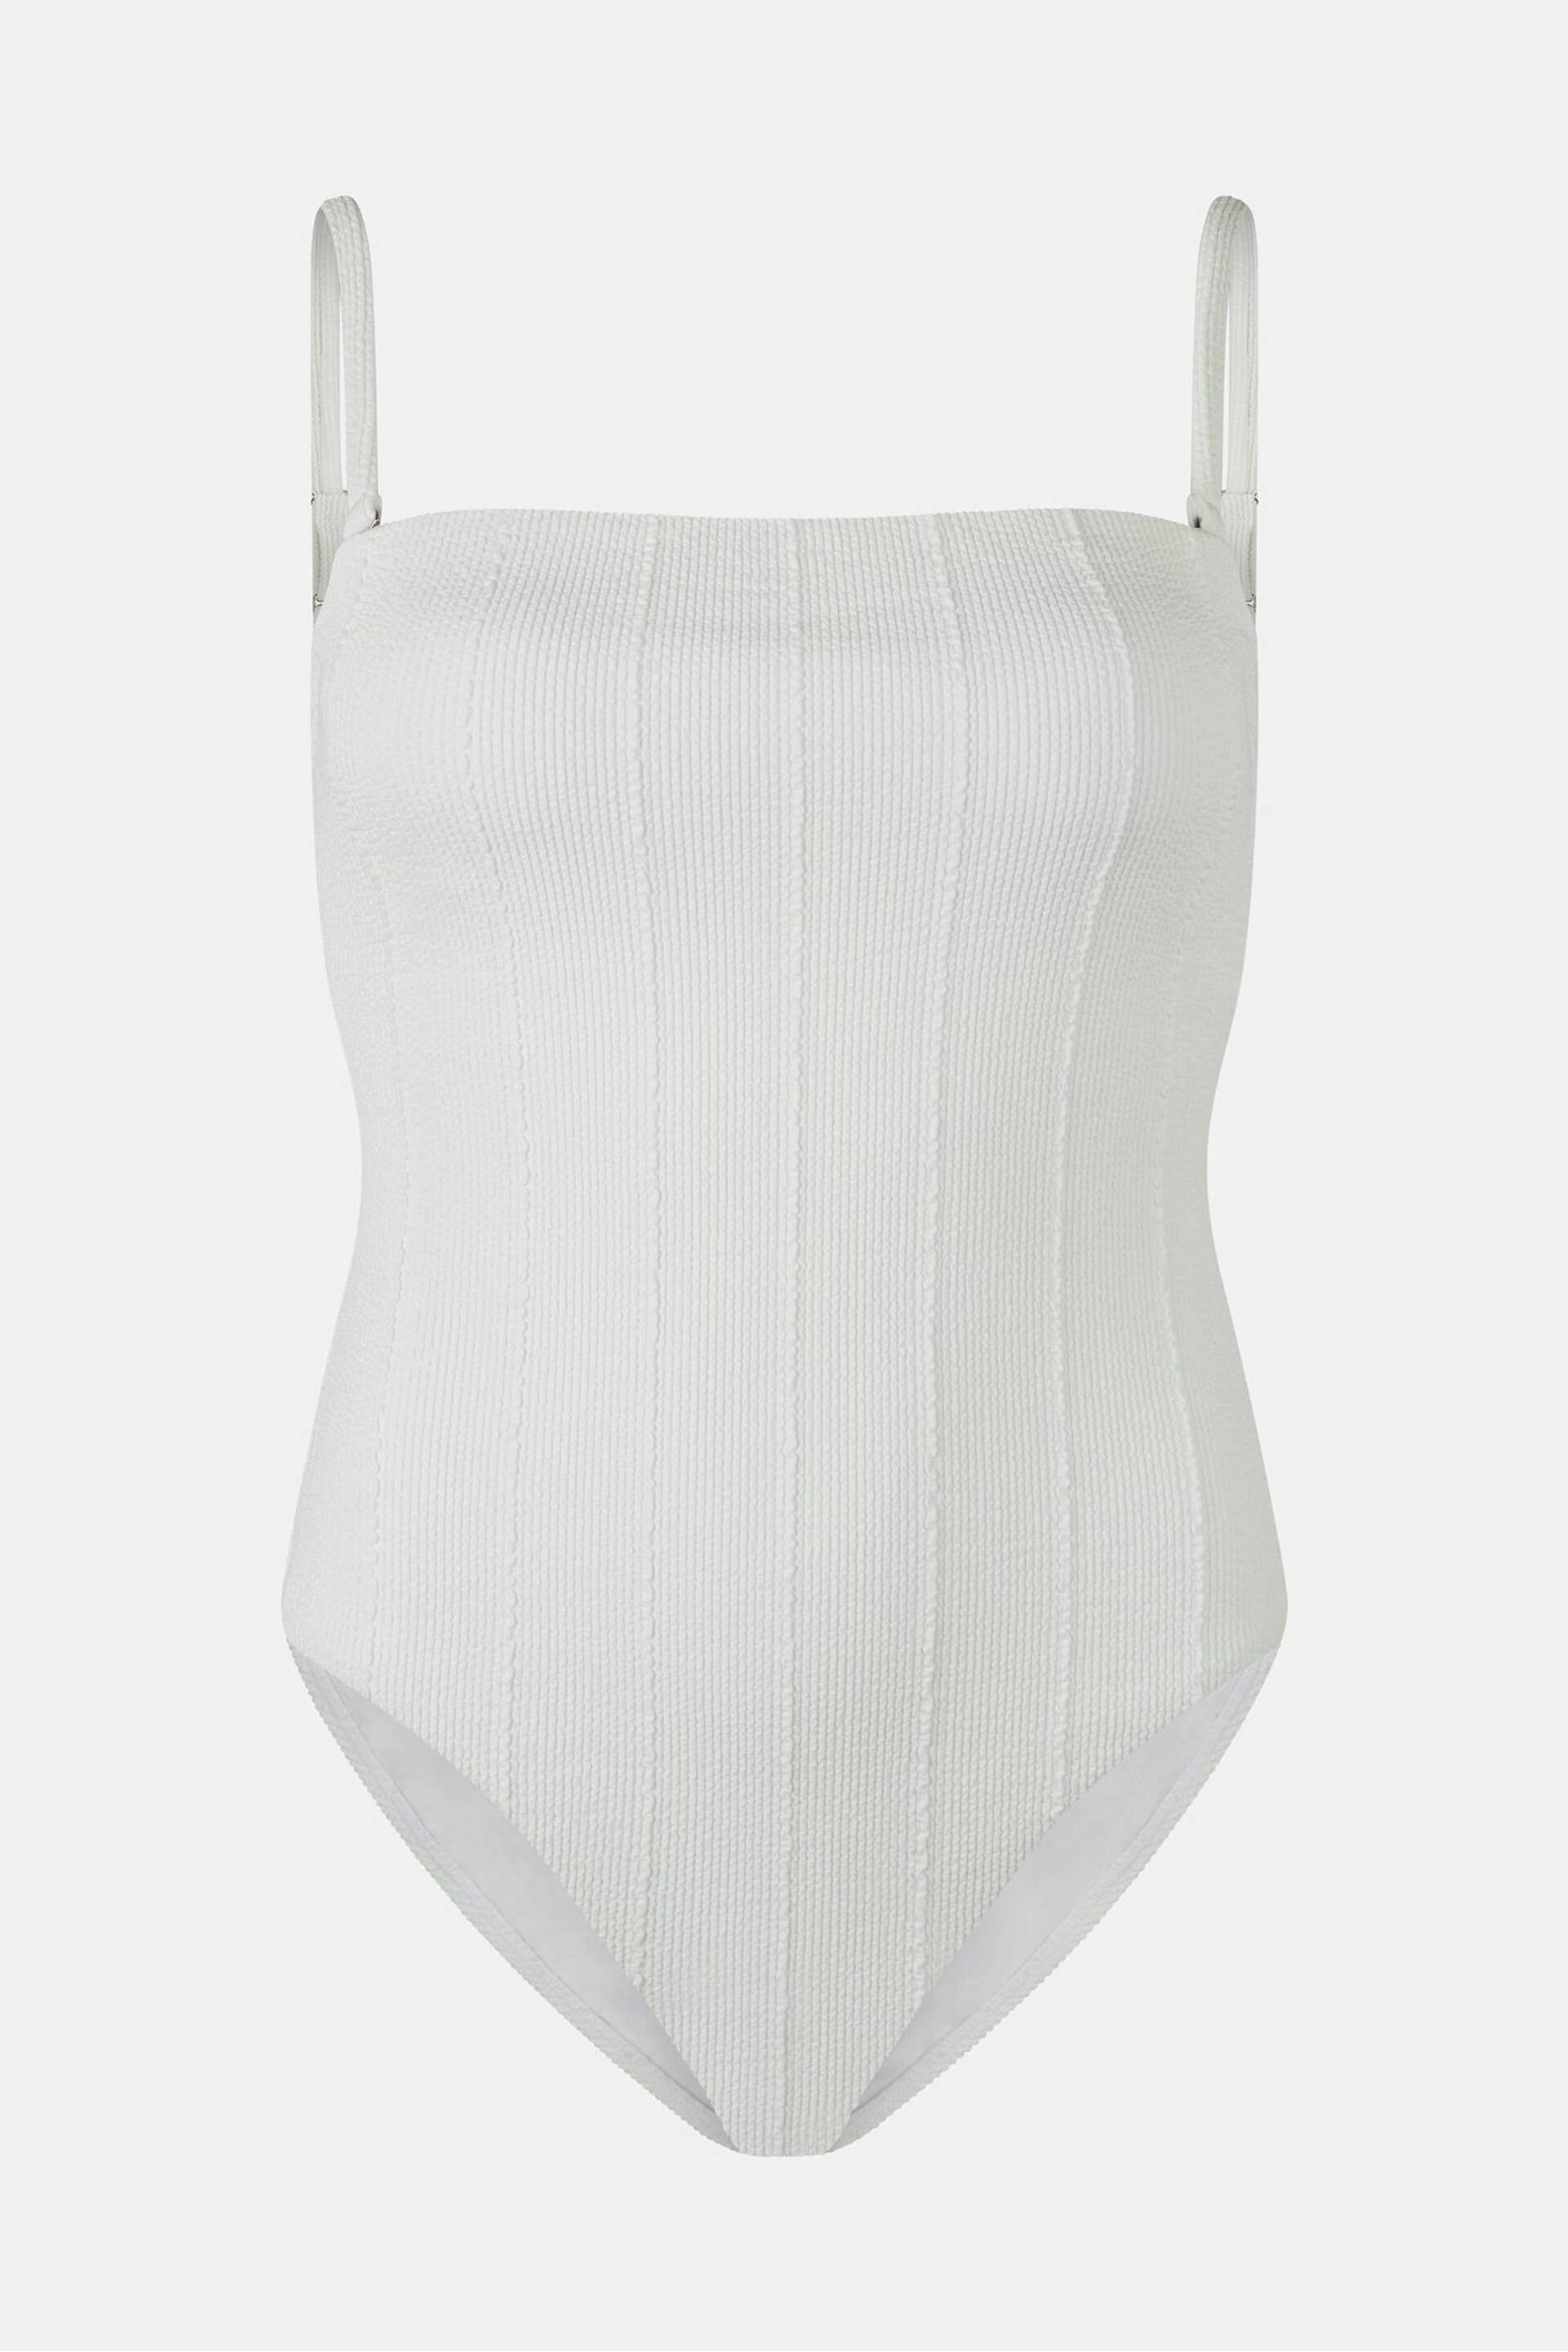 Mint Velvet White Ripple Bandeau Tummy Control Swimsuit - Image 4 of 5